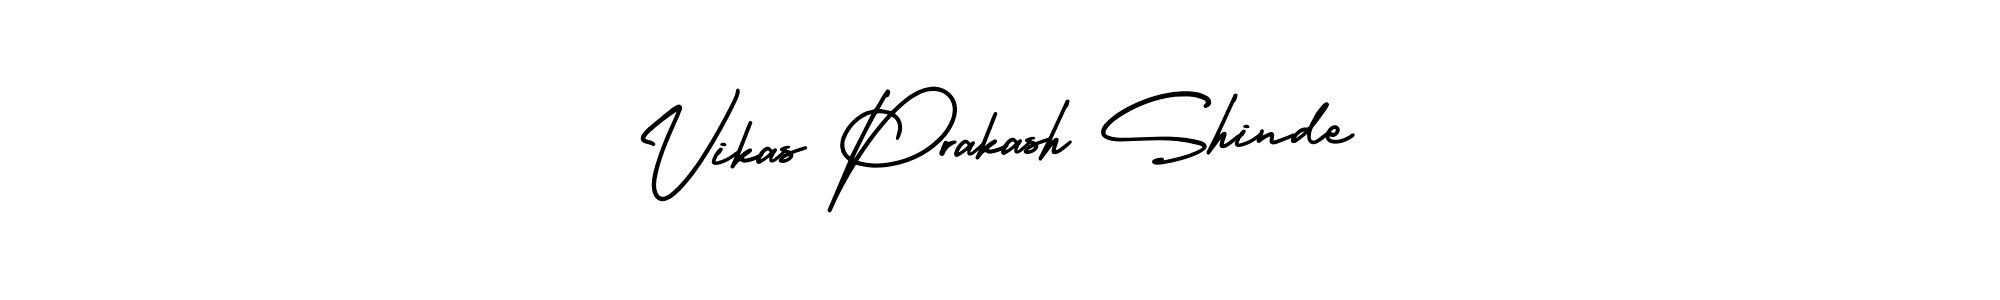 Best and Professional Signature Style for Vikas Prakash Shinde. AmerikaSignatureDemo-Regular Best Signature Style Collection. Vikas Prakash Shinde signature style 3 images and pictures png